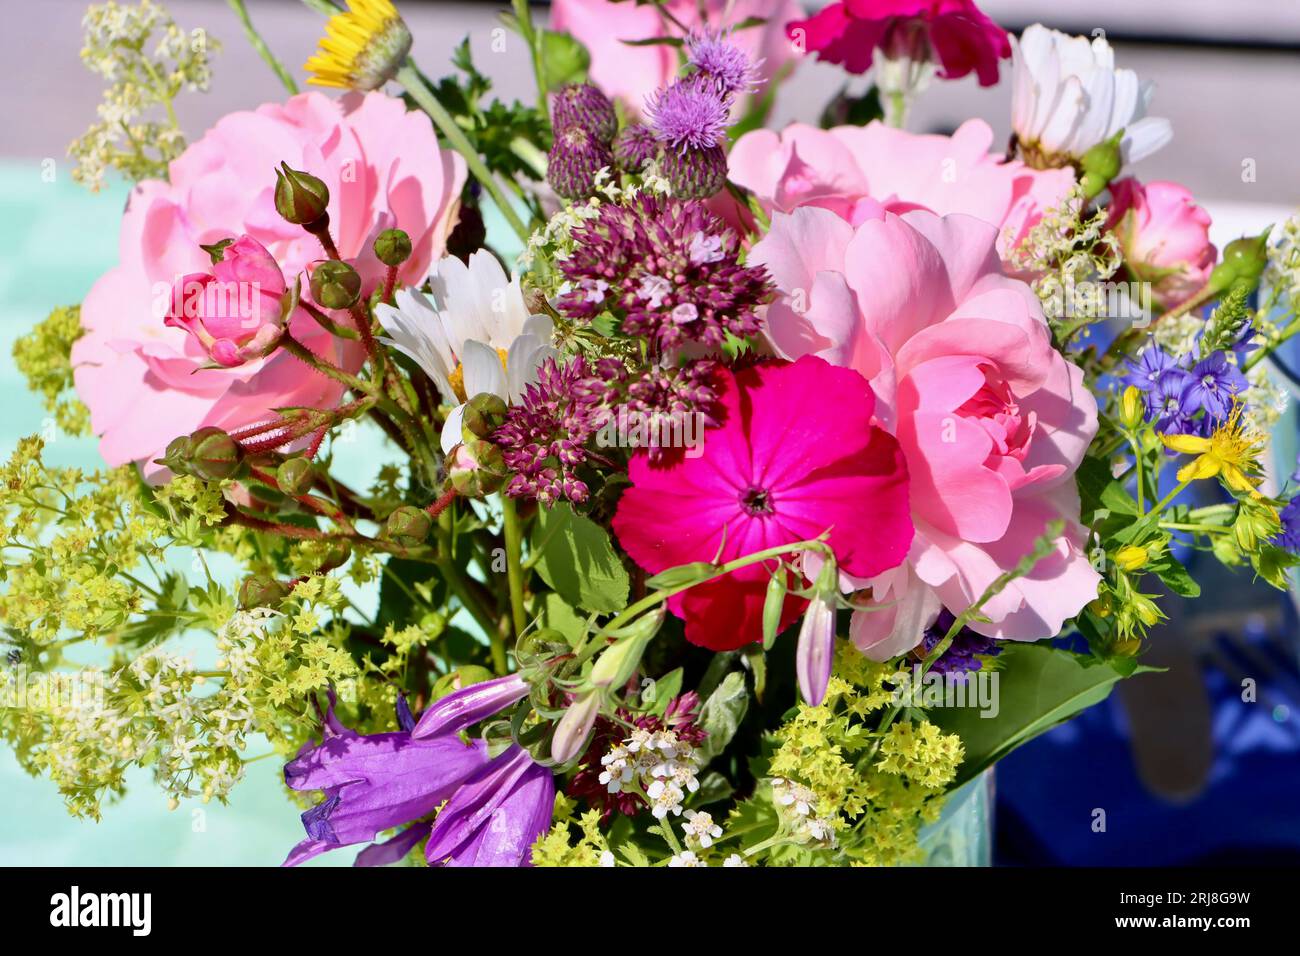 Romantic bouquet of Swedish garden flowers and wild flowers. Stock Photo